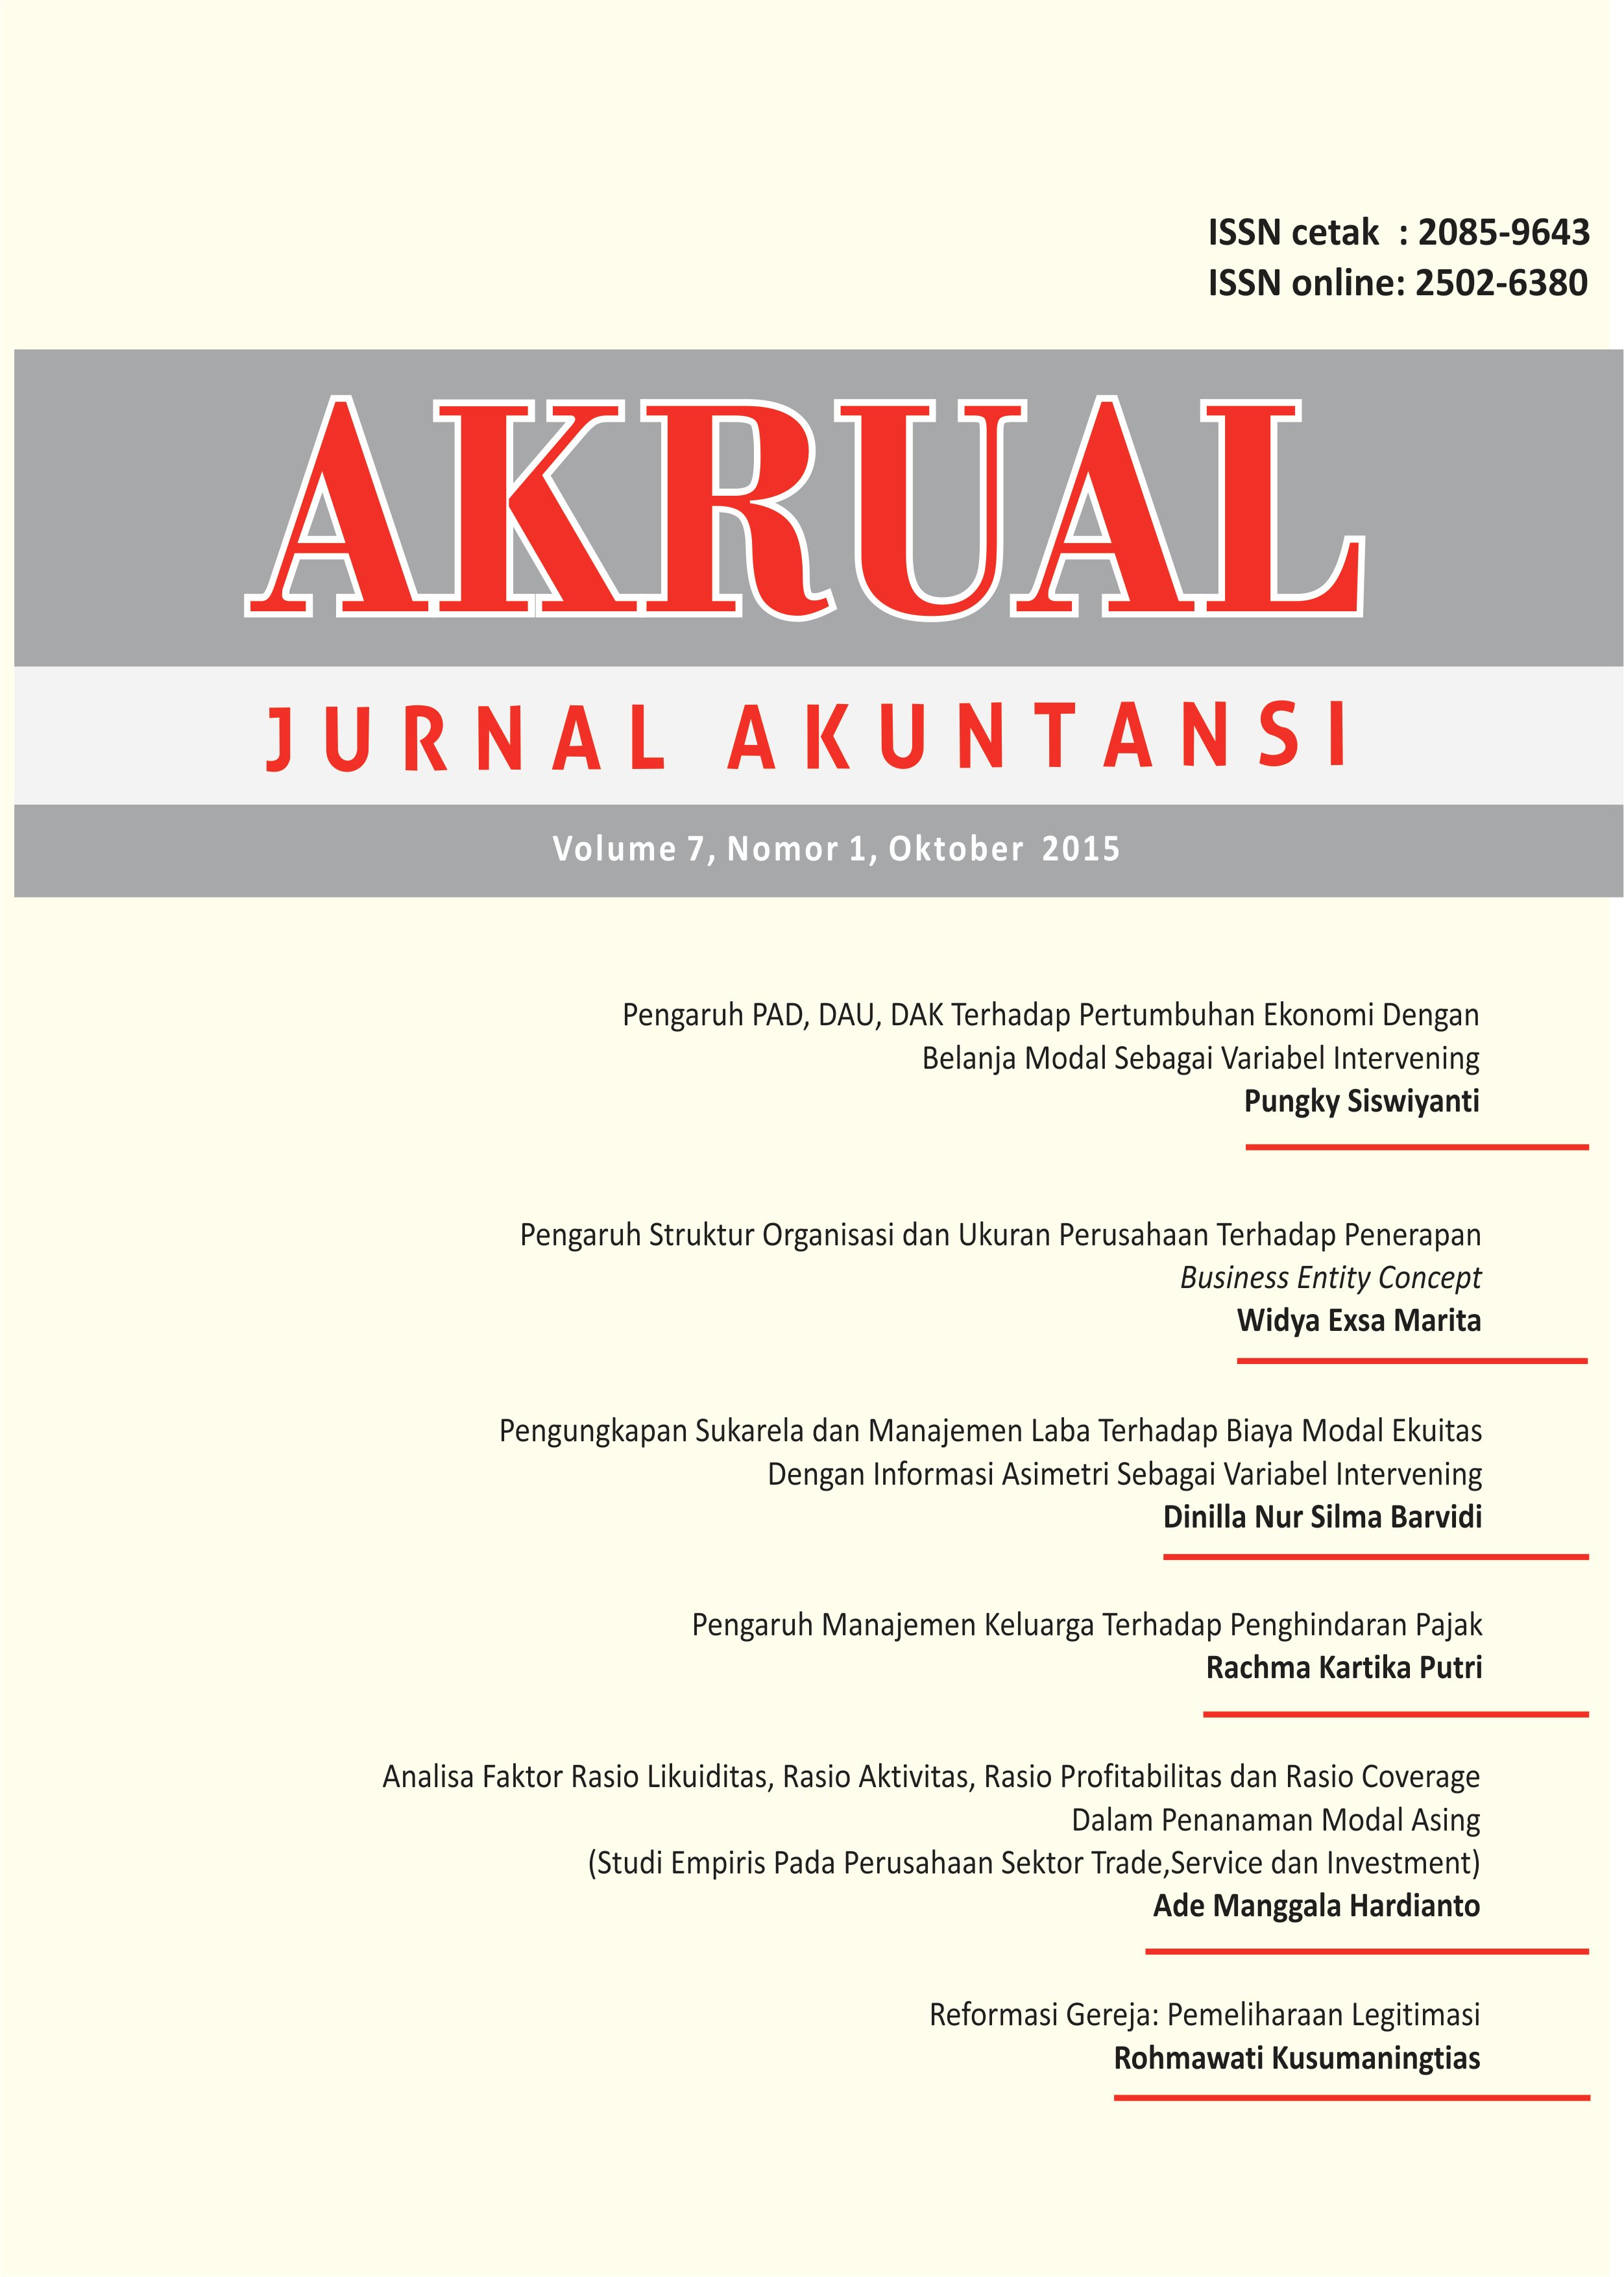 					View Vol. 7 No. 1: AKRUAL: Jurnal Akuntansi (Oktober 2015)
				